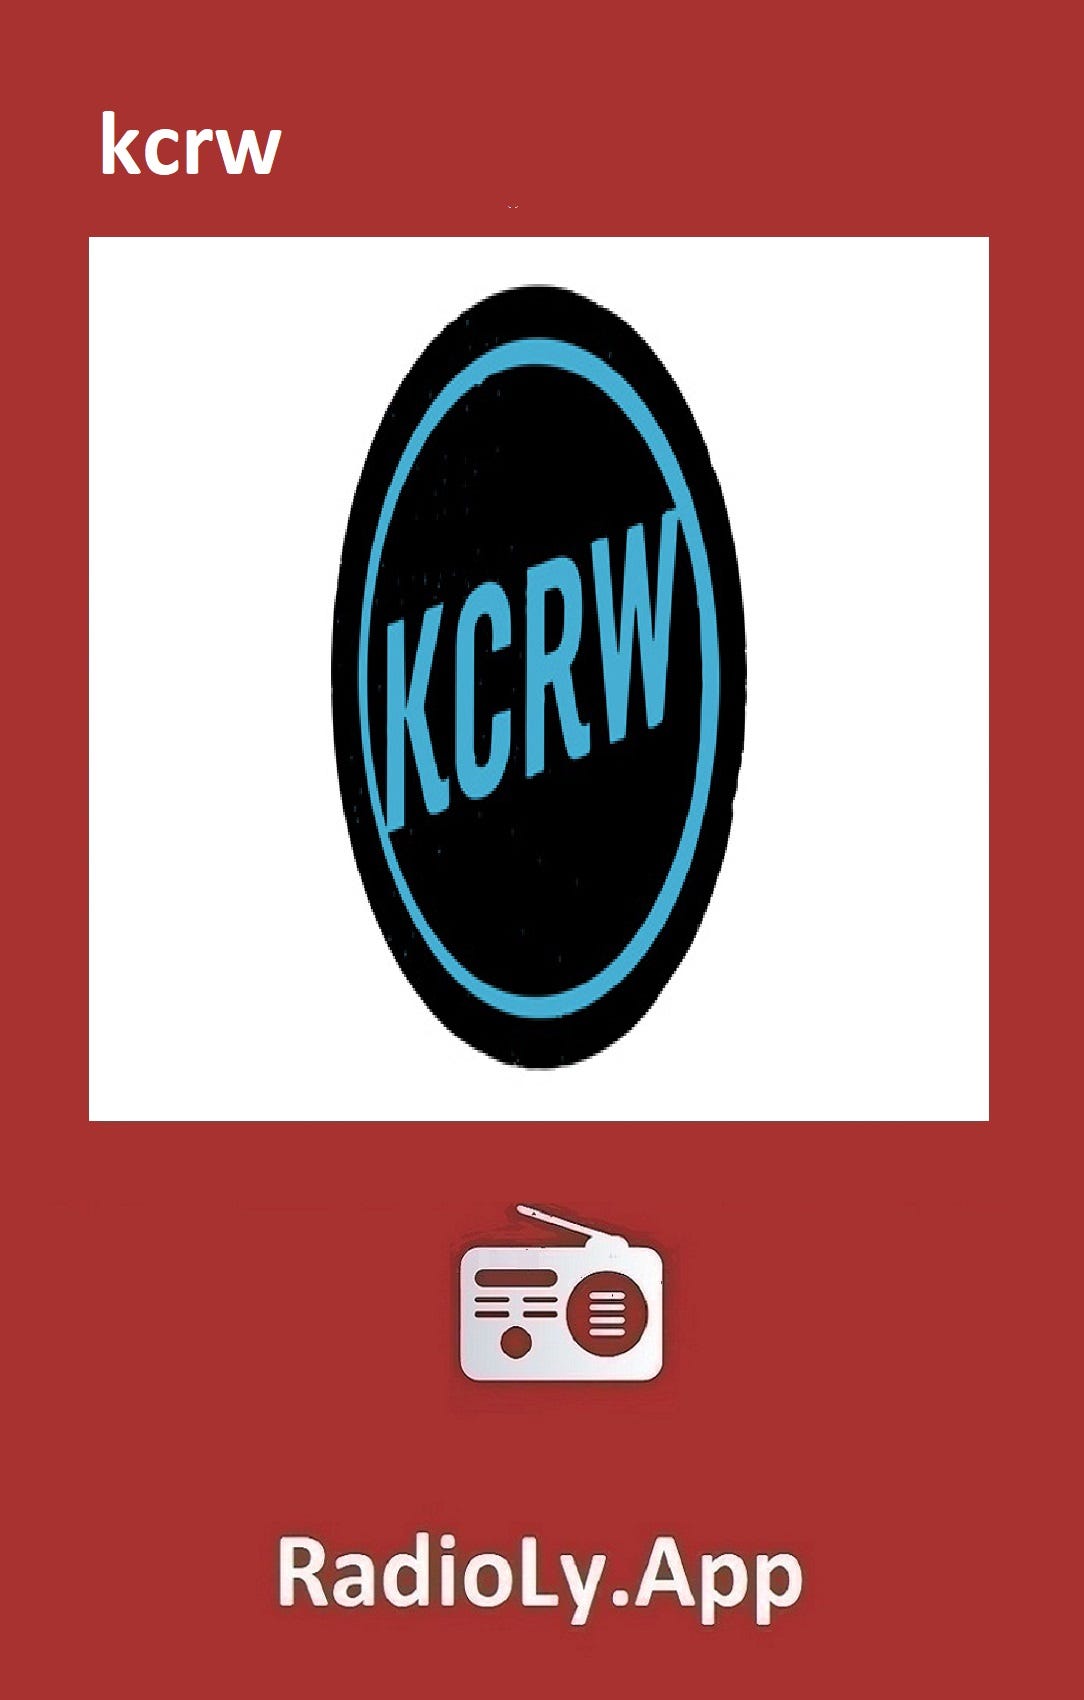 kcrw — USA Internet Radio Station Online — RadiolyApp - Radioly - Medium